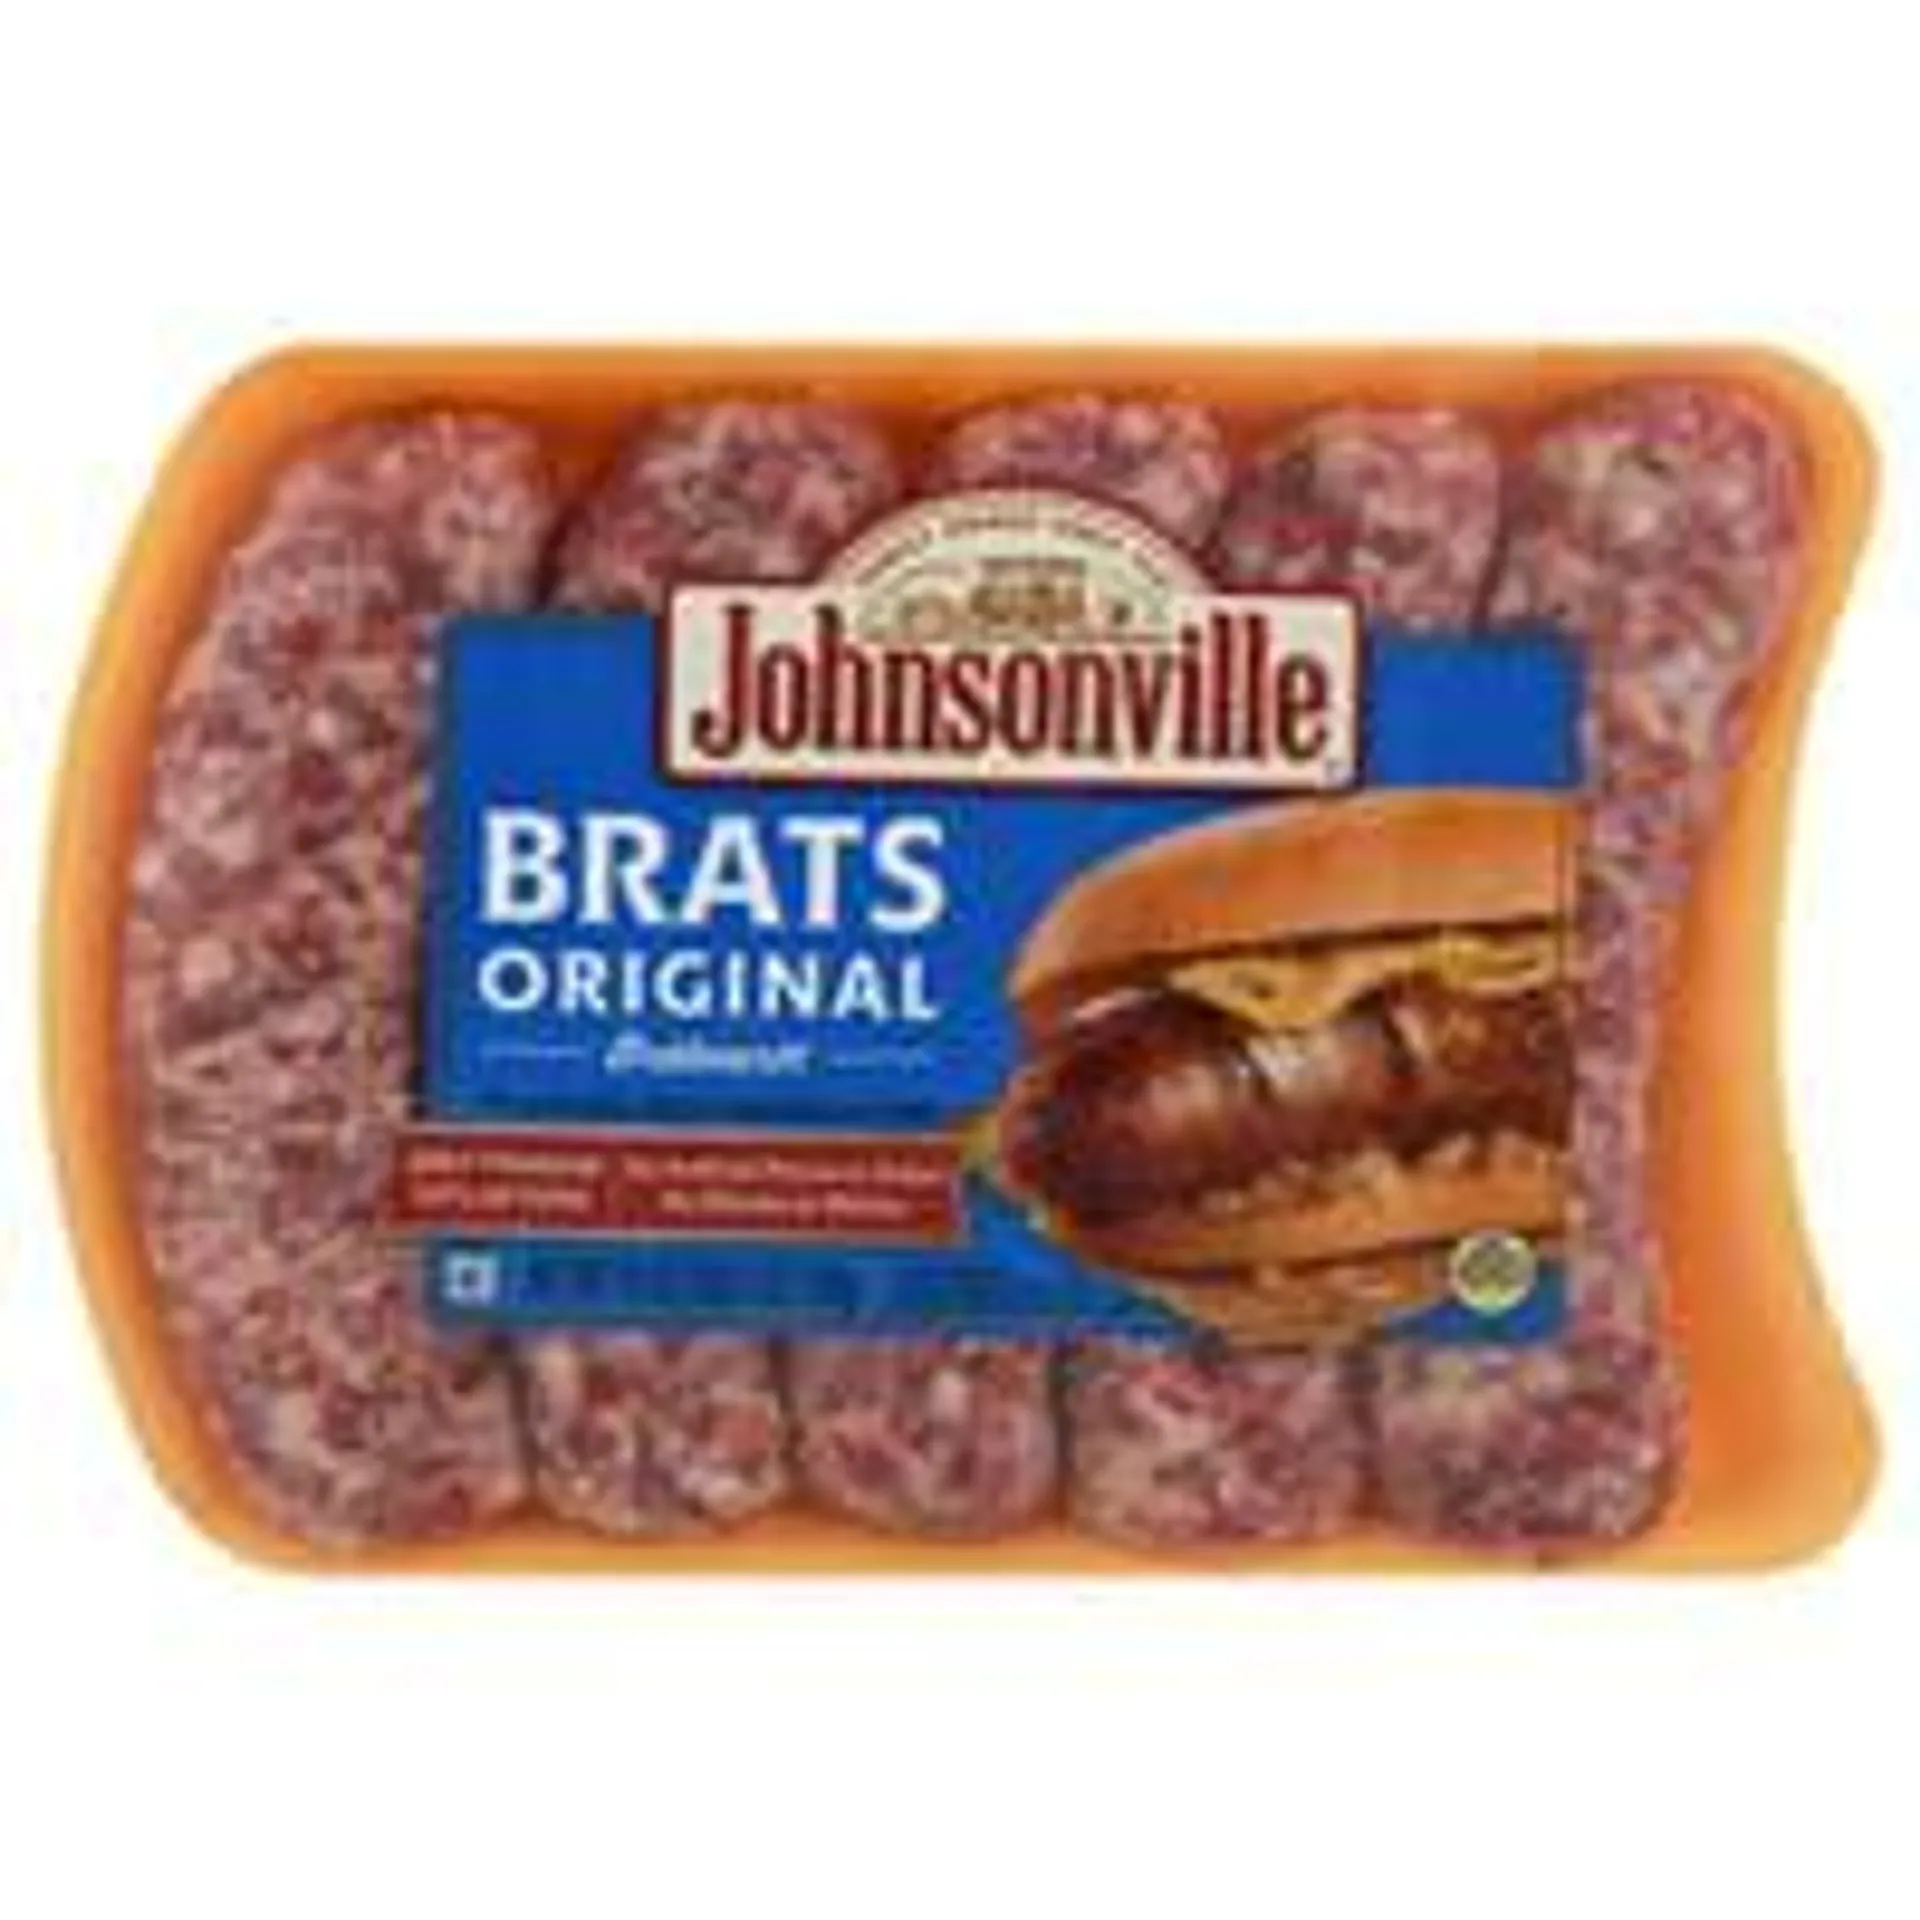 Johnsonville, Bratwurst, Original, Brats